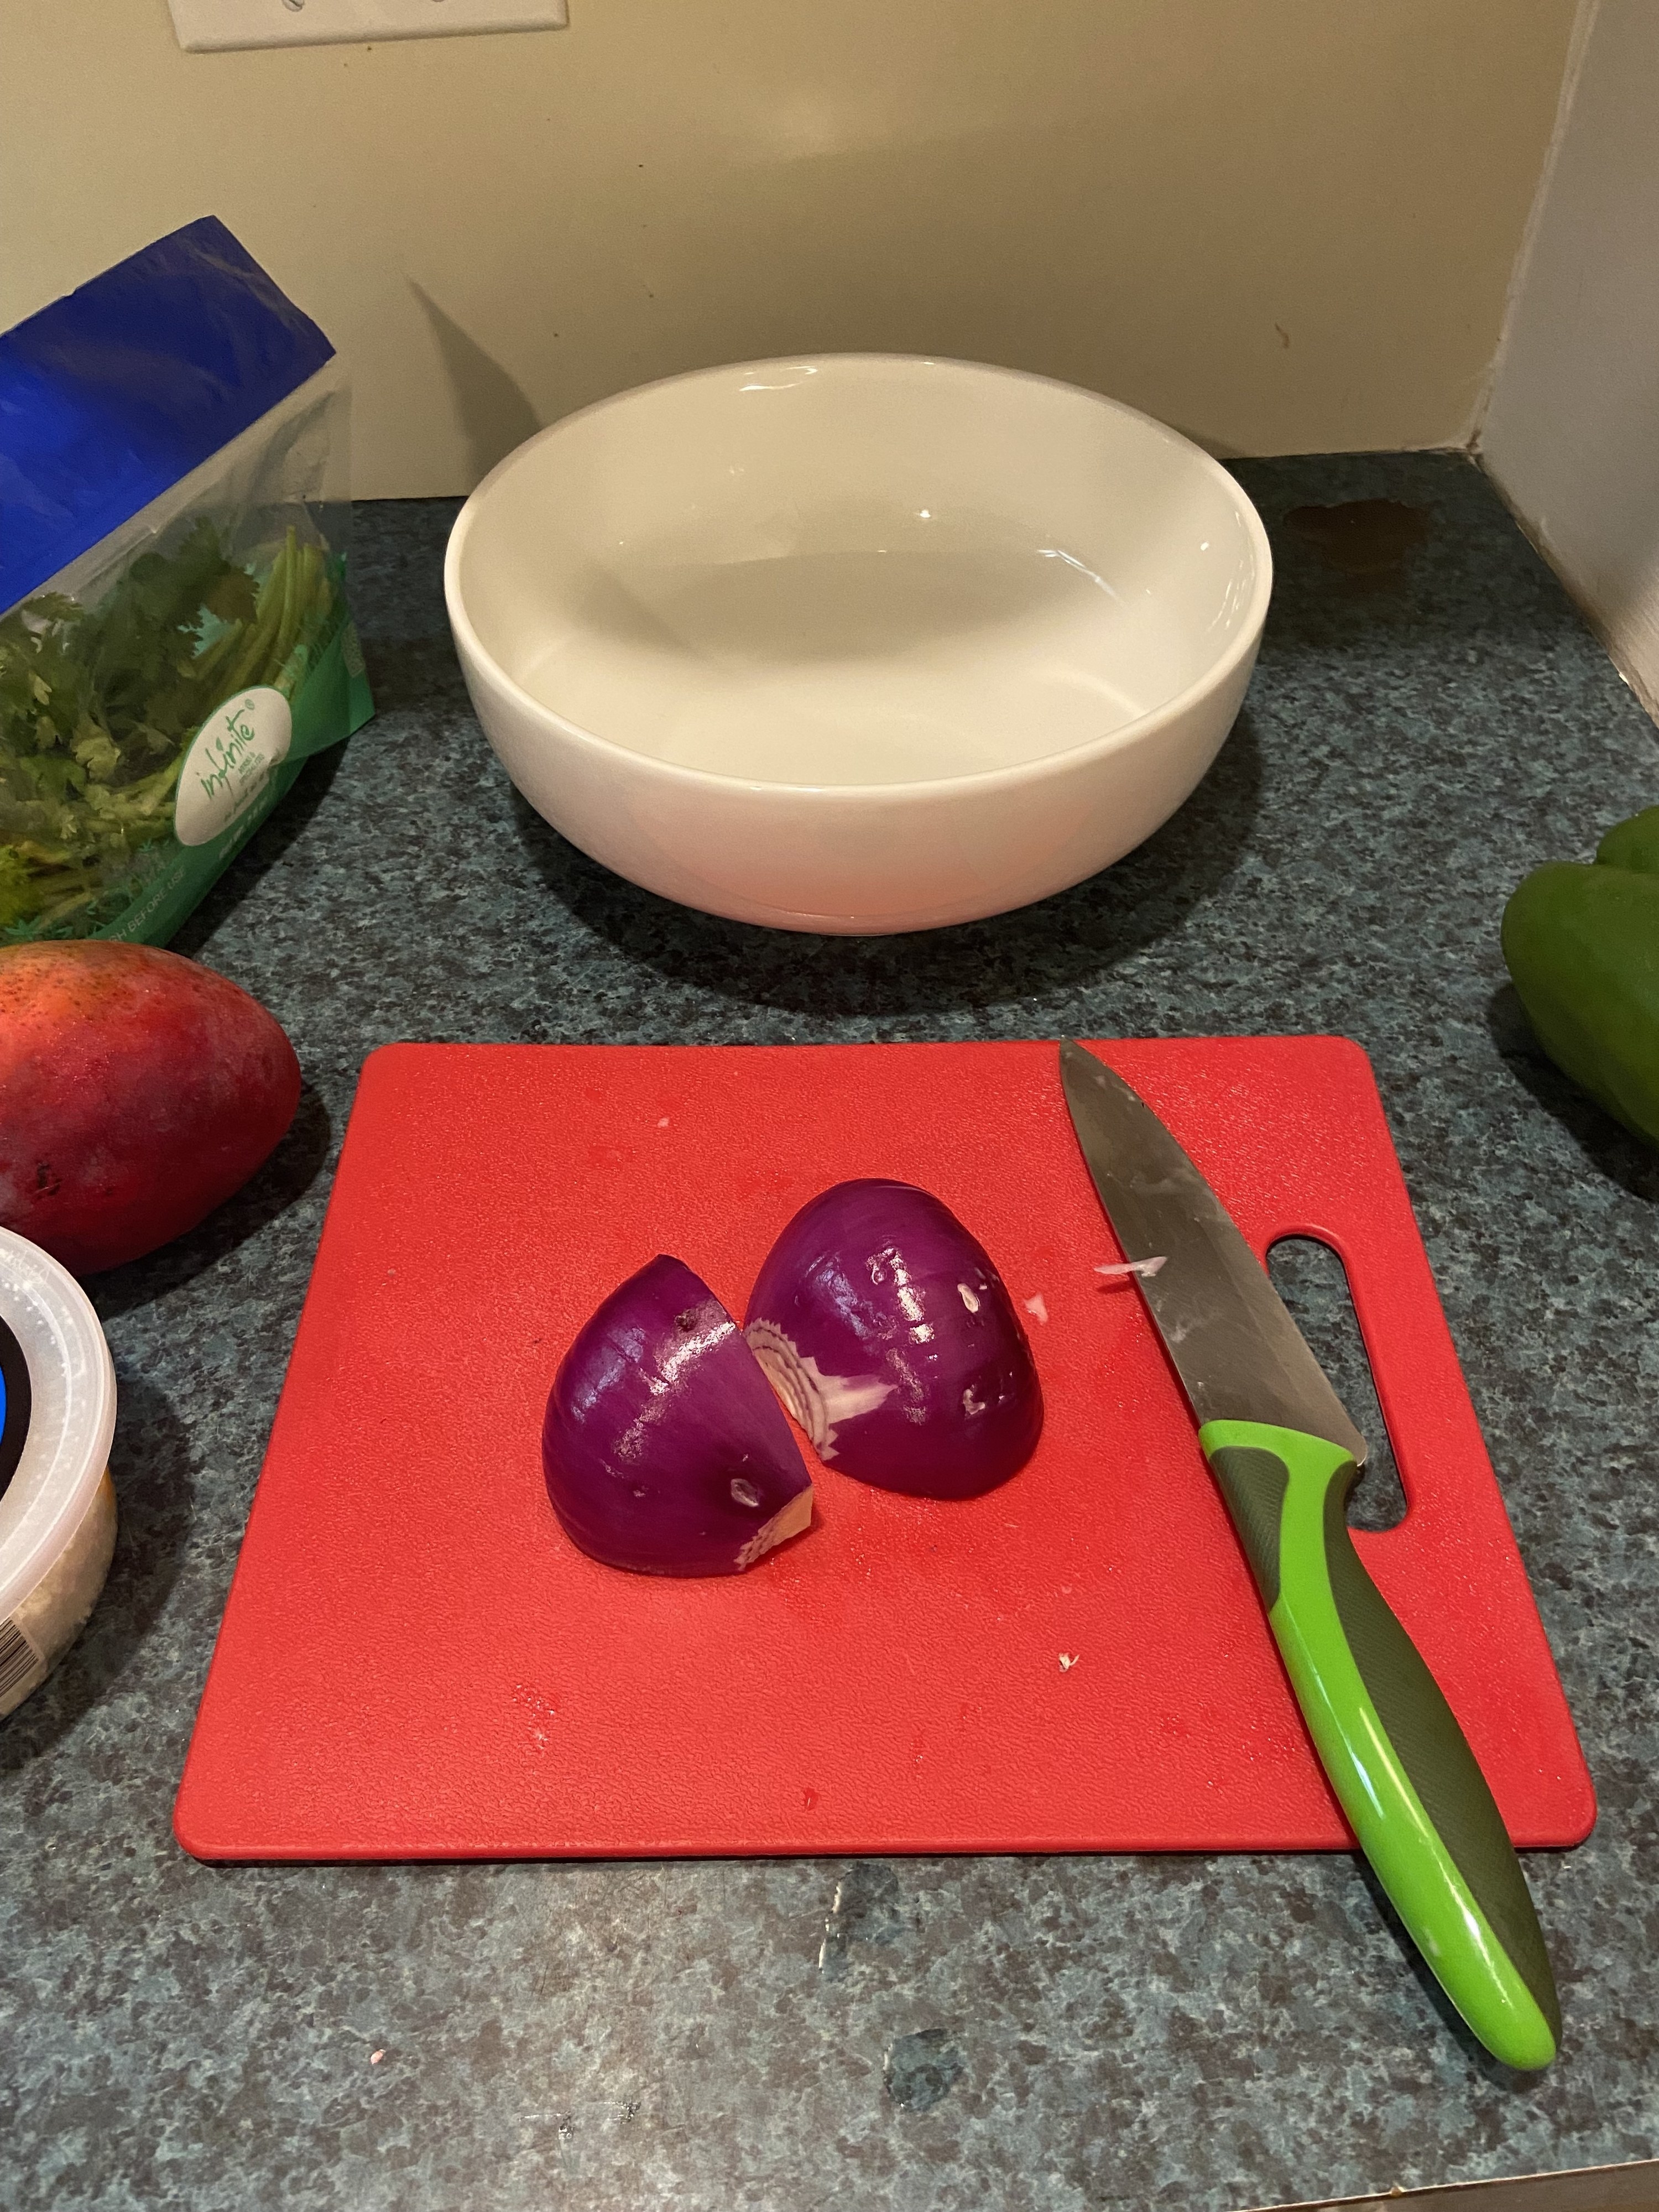 A red onion on a cutting board